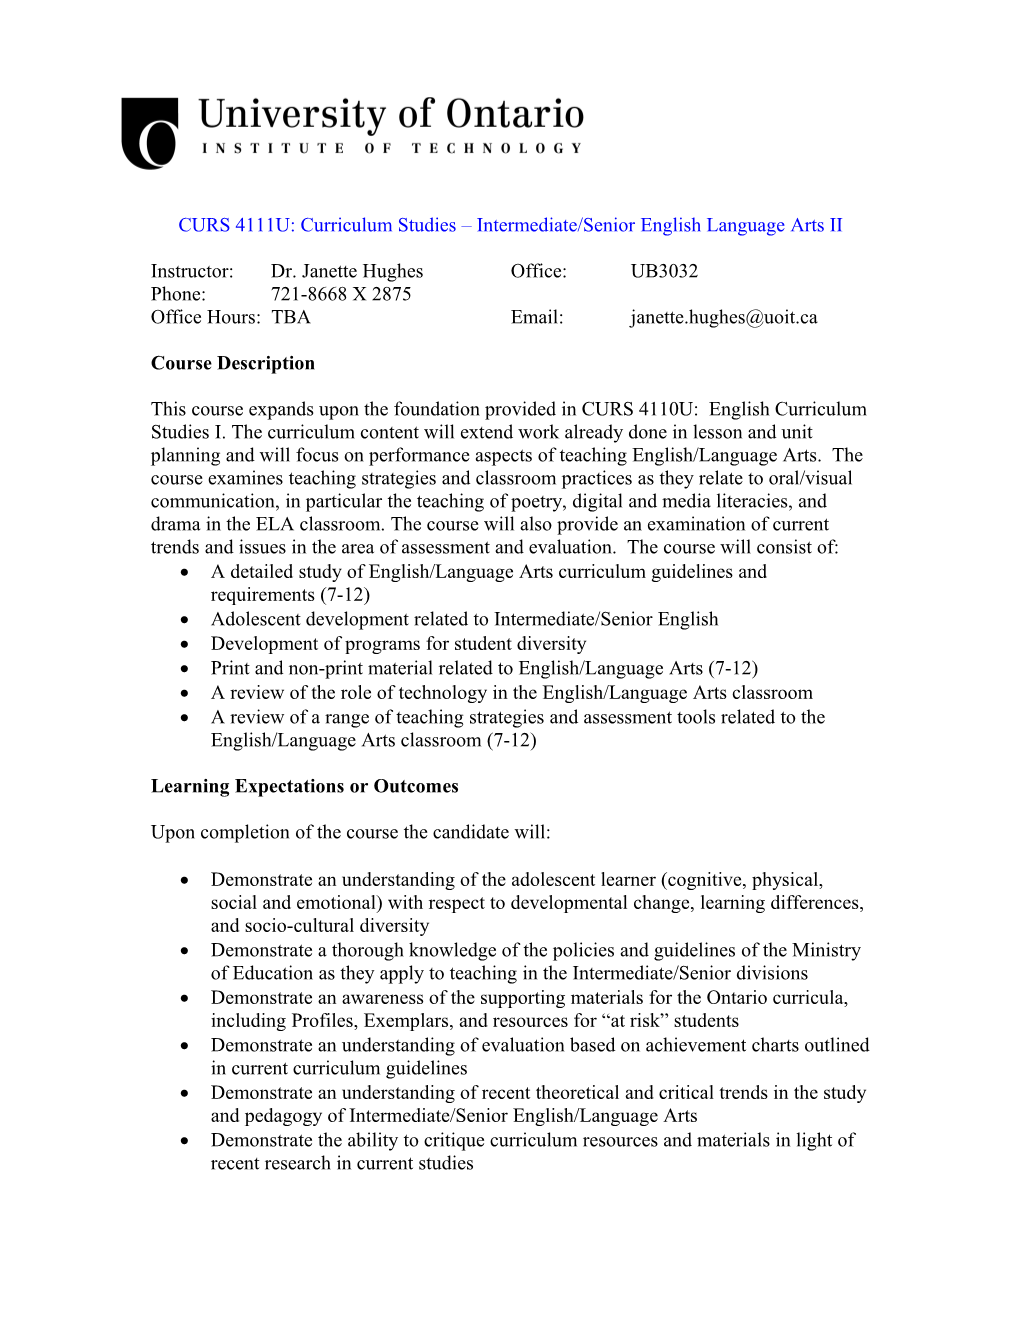 CURS 4111U: Curriculum Studies Intermediate/Senior English Language Arts II s1